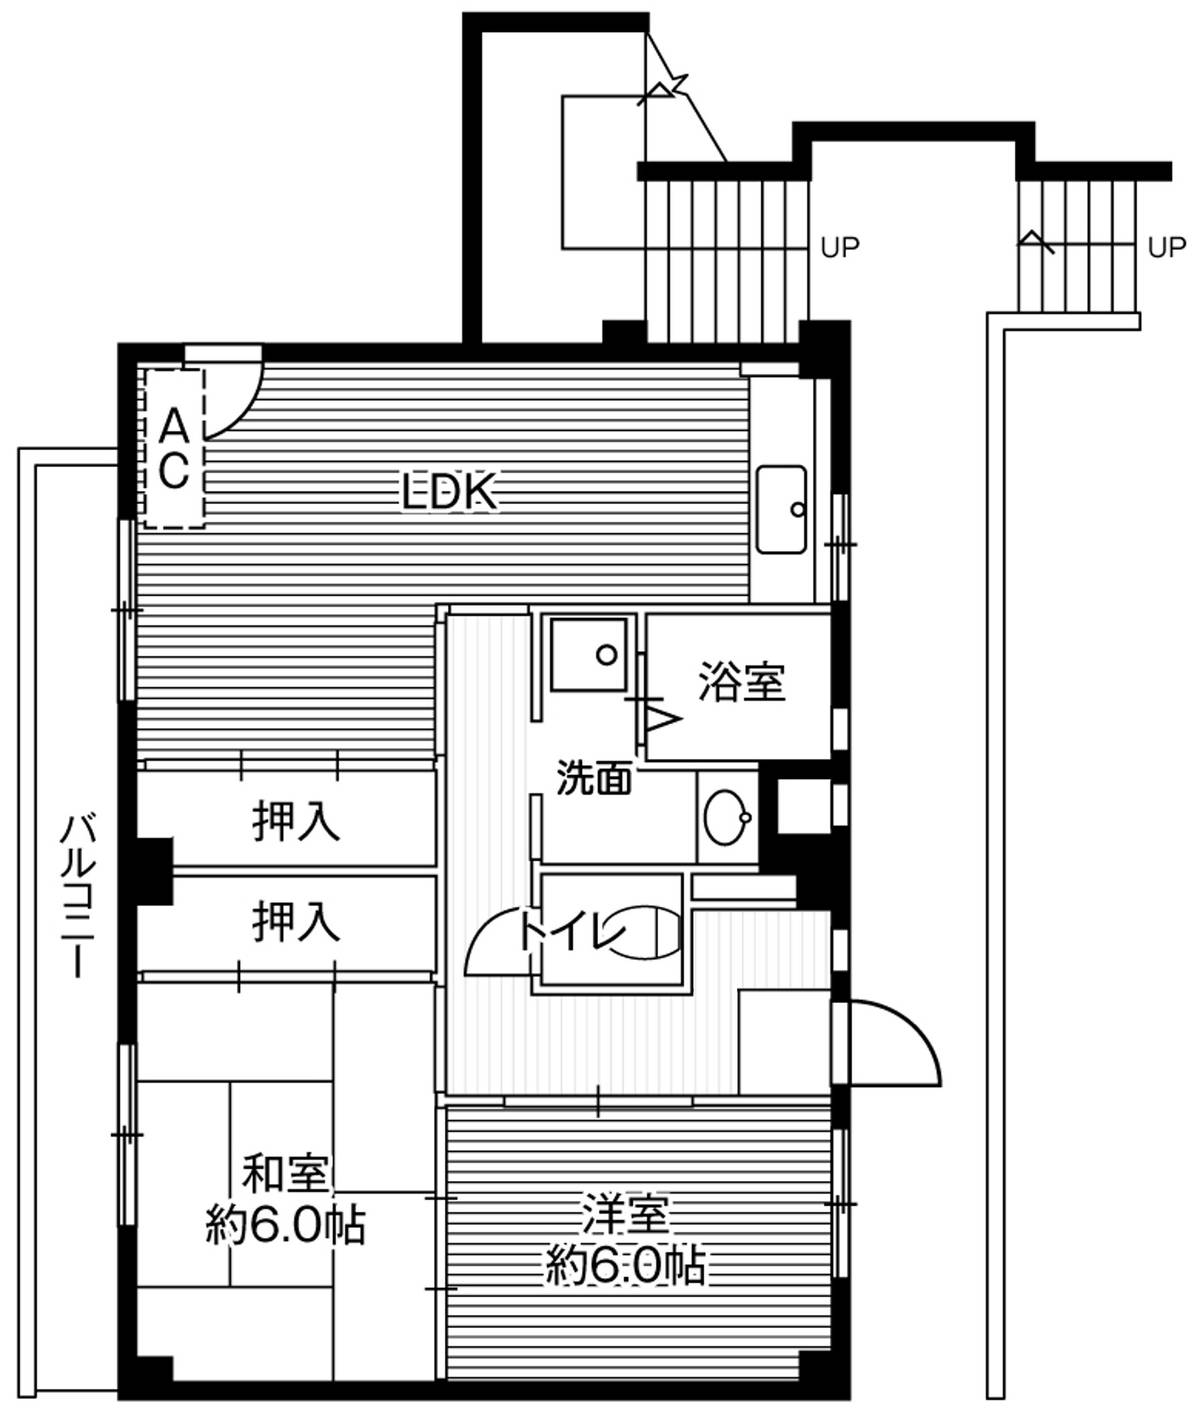 2LDK floorplan of Village House Ichihara in Ichihara-shi